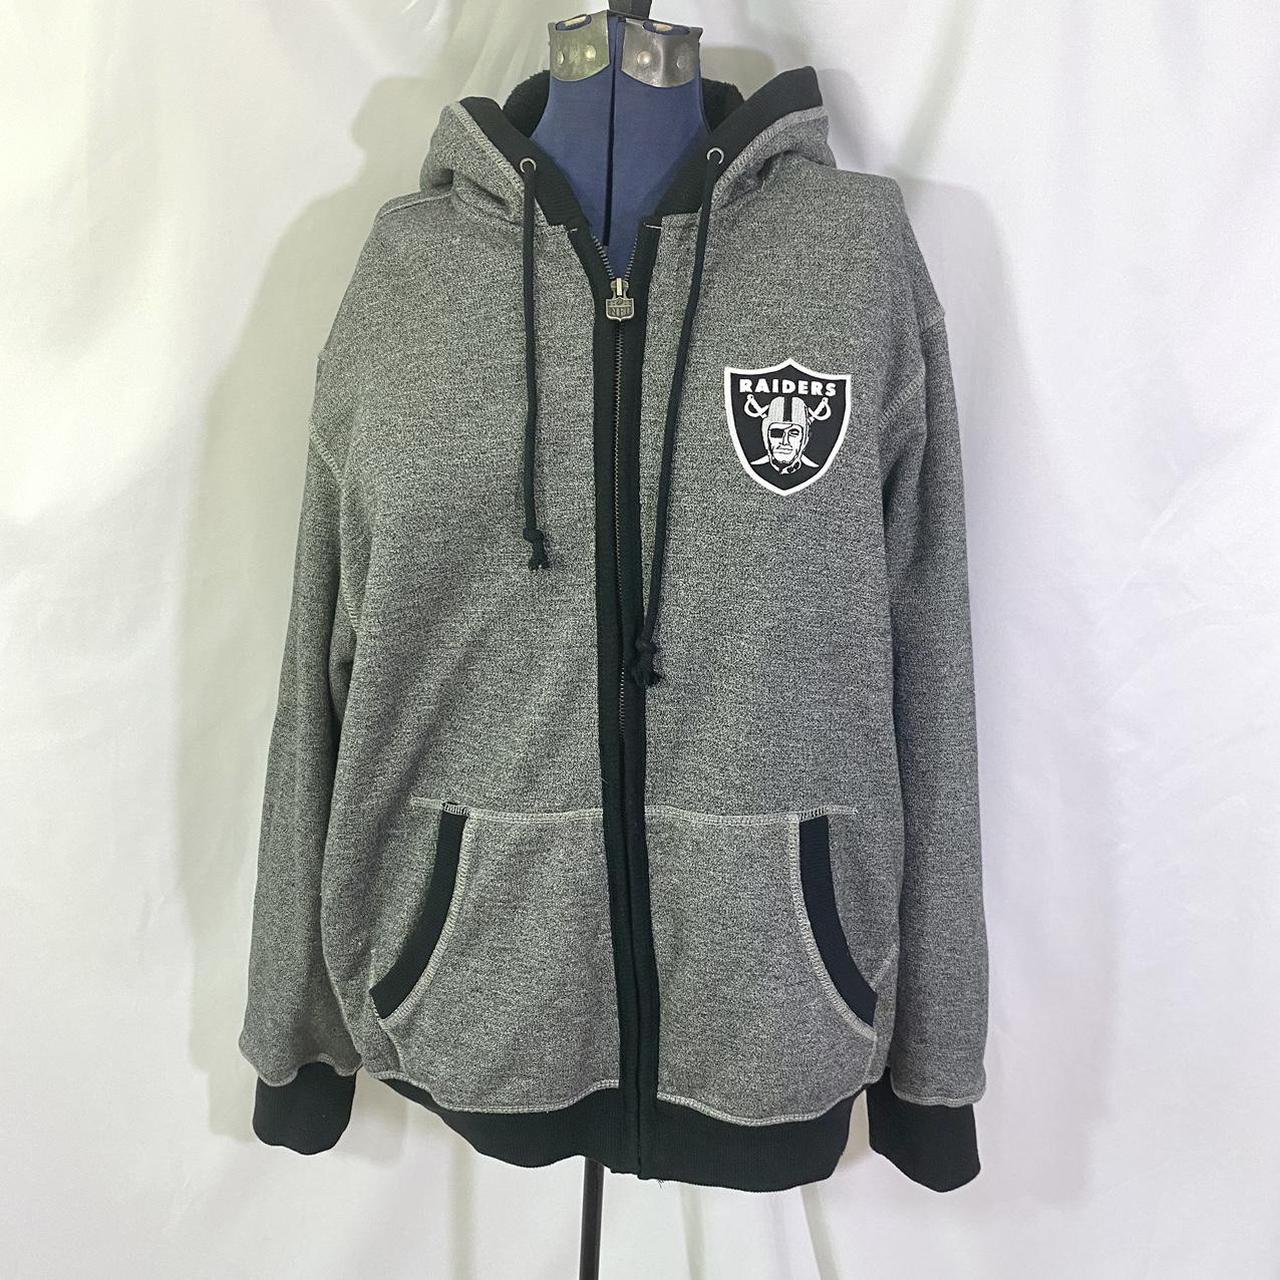 NFL Raiders Zip-Up Jacket